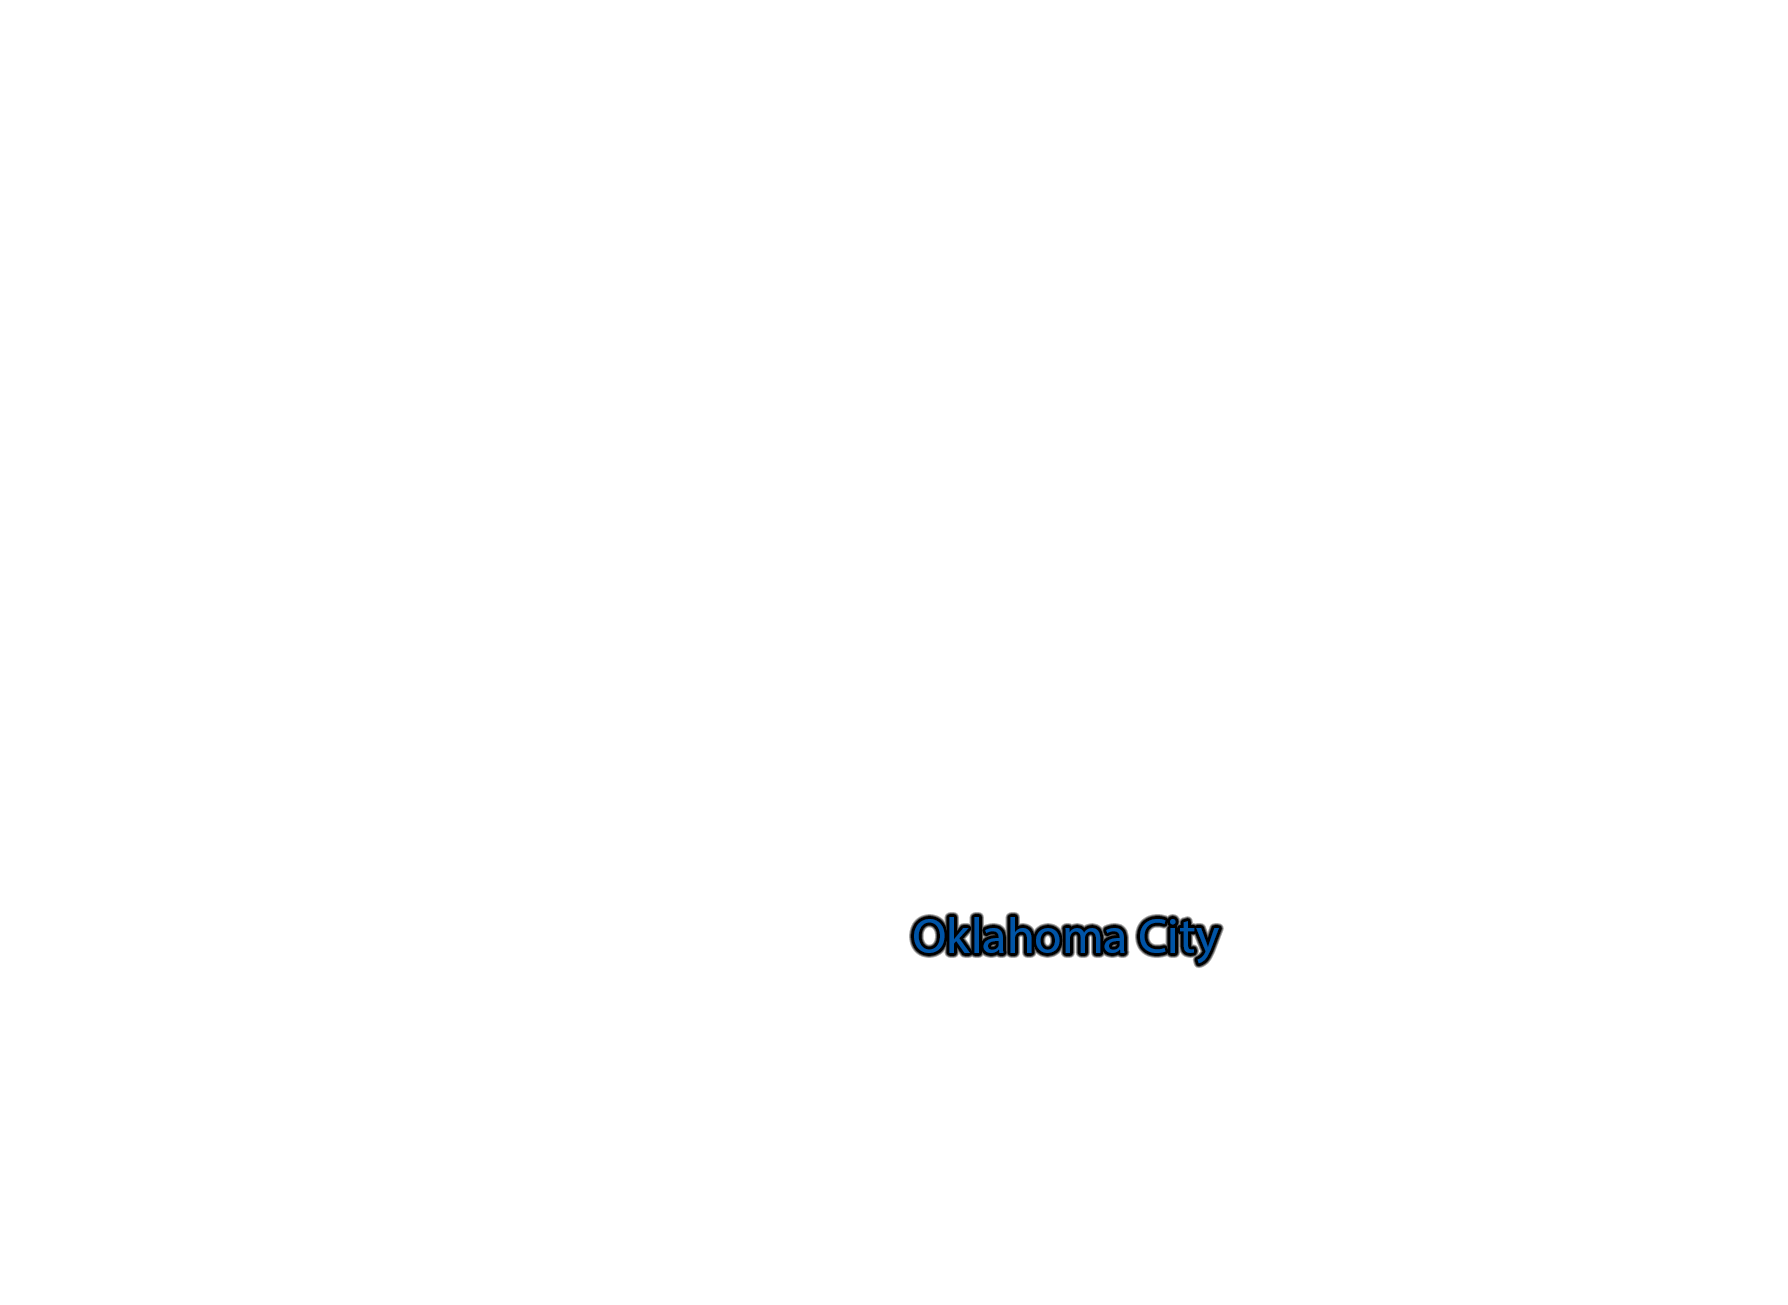 Oklahoma-City label with glow